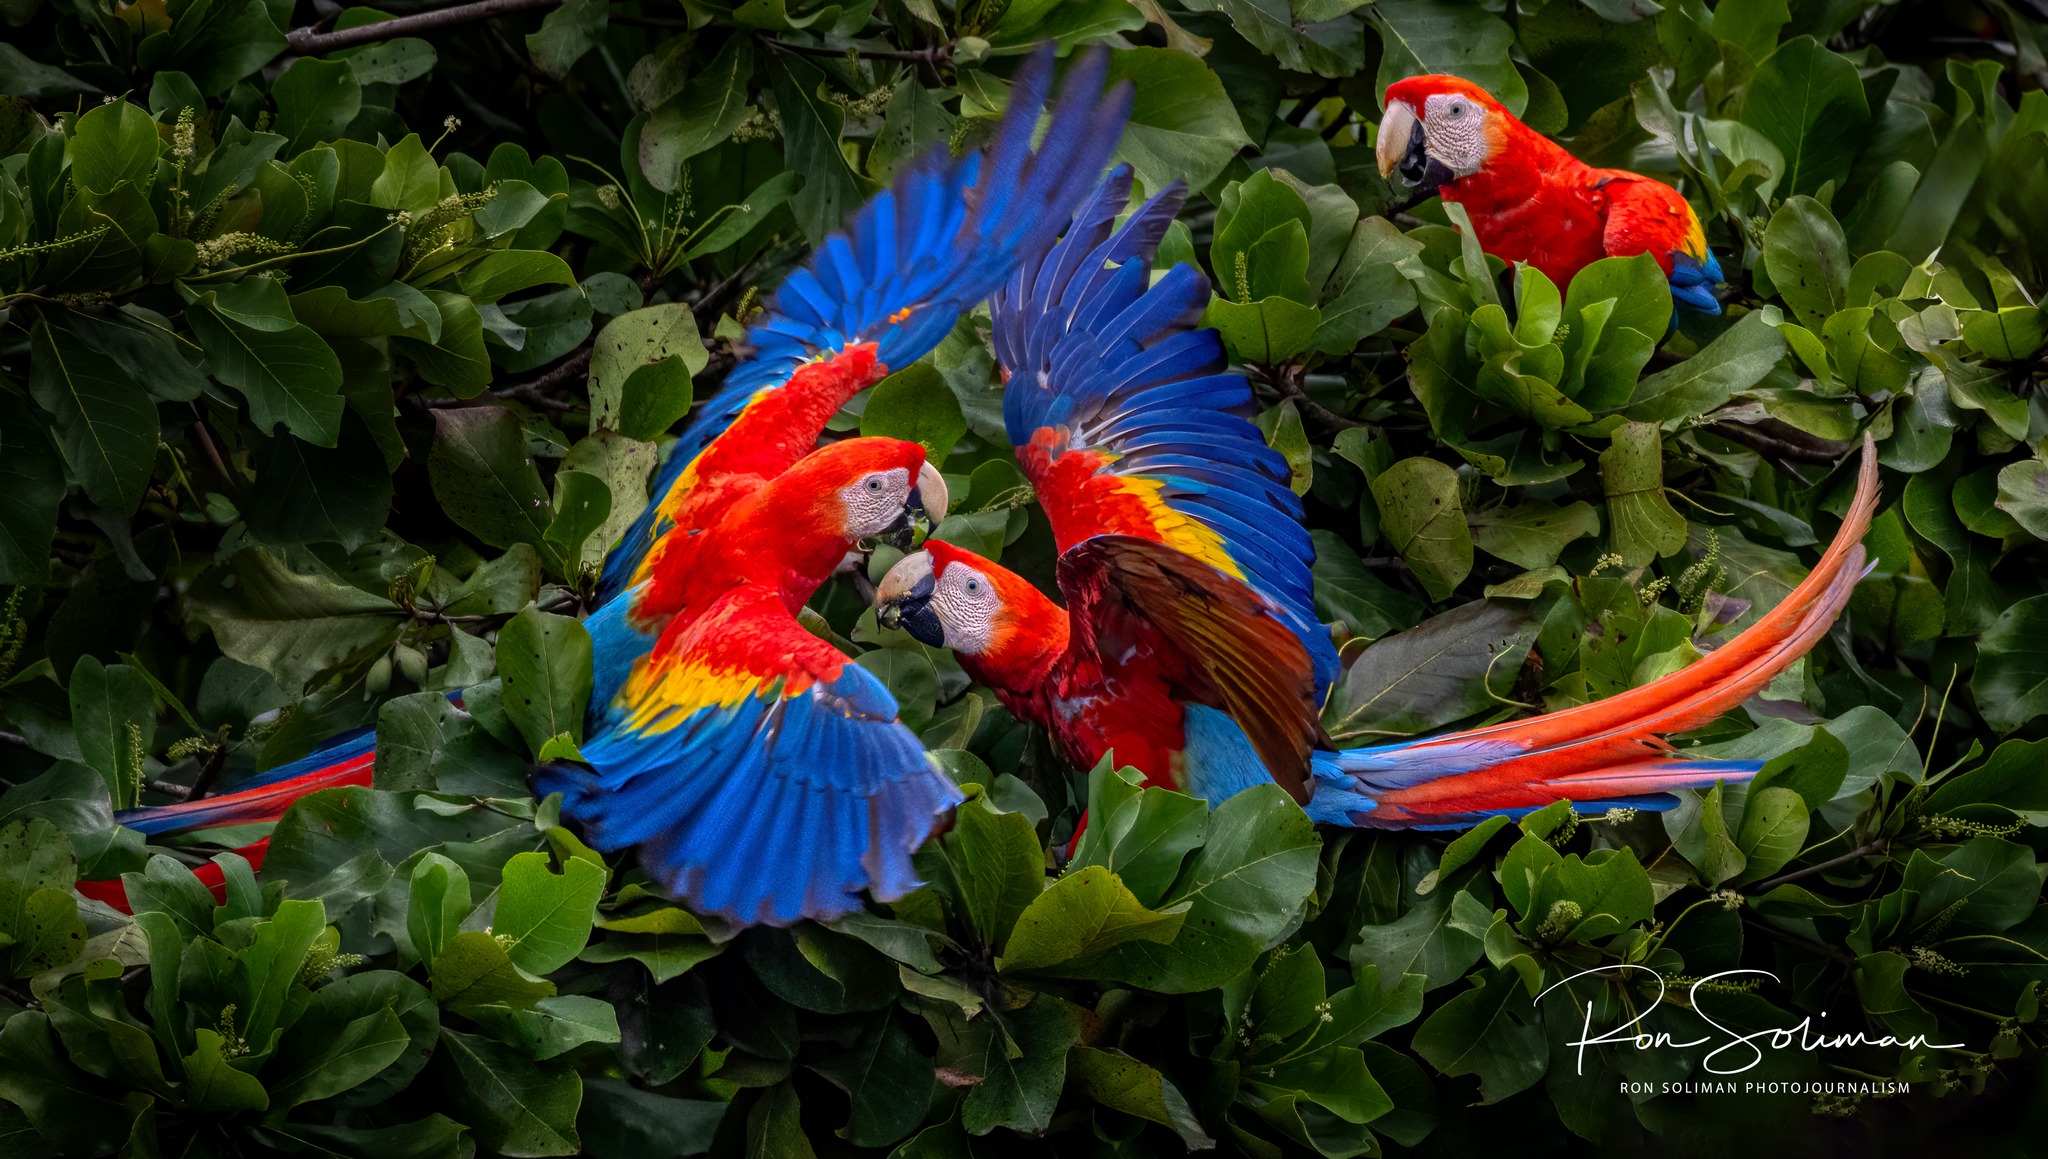 Costa Rica wildlife photos - Best Earth Day photos